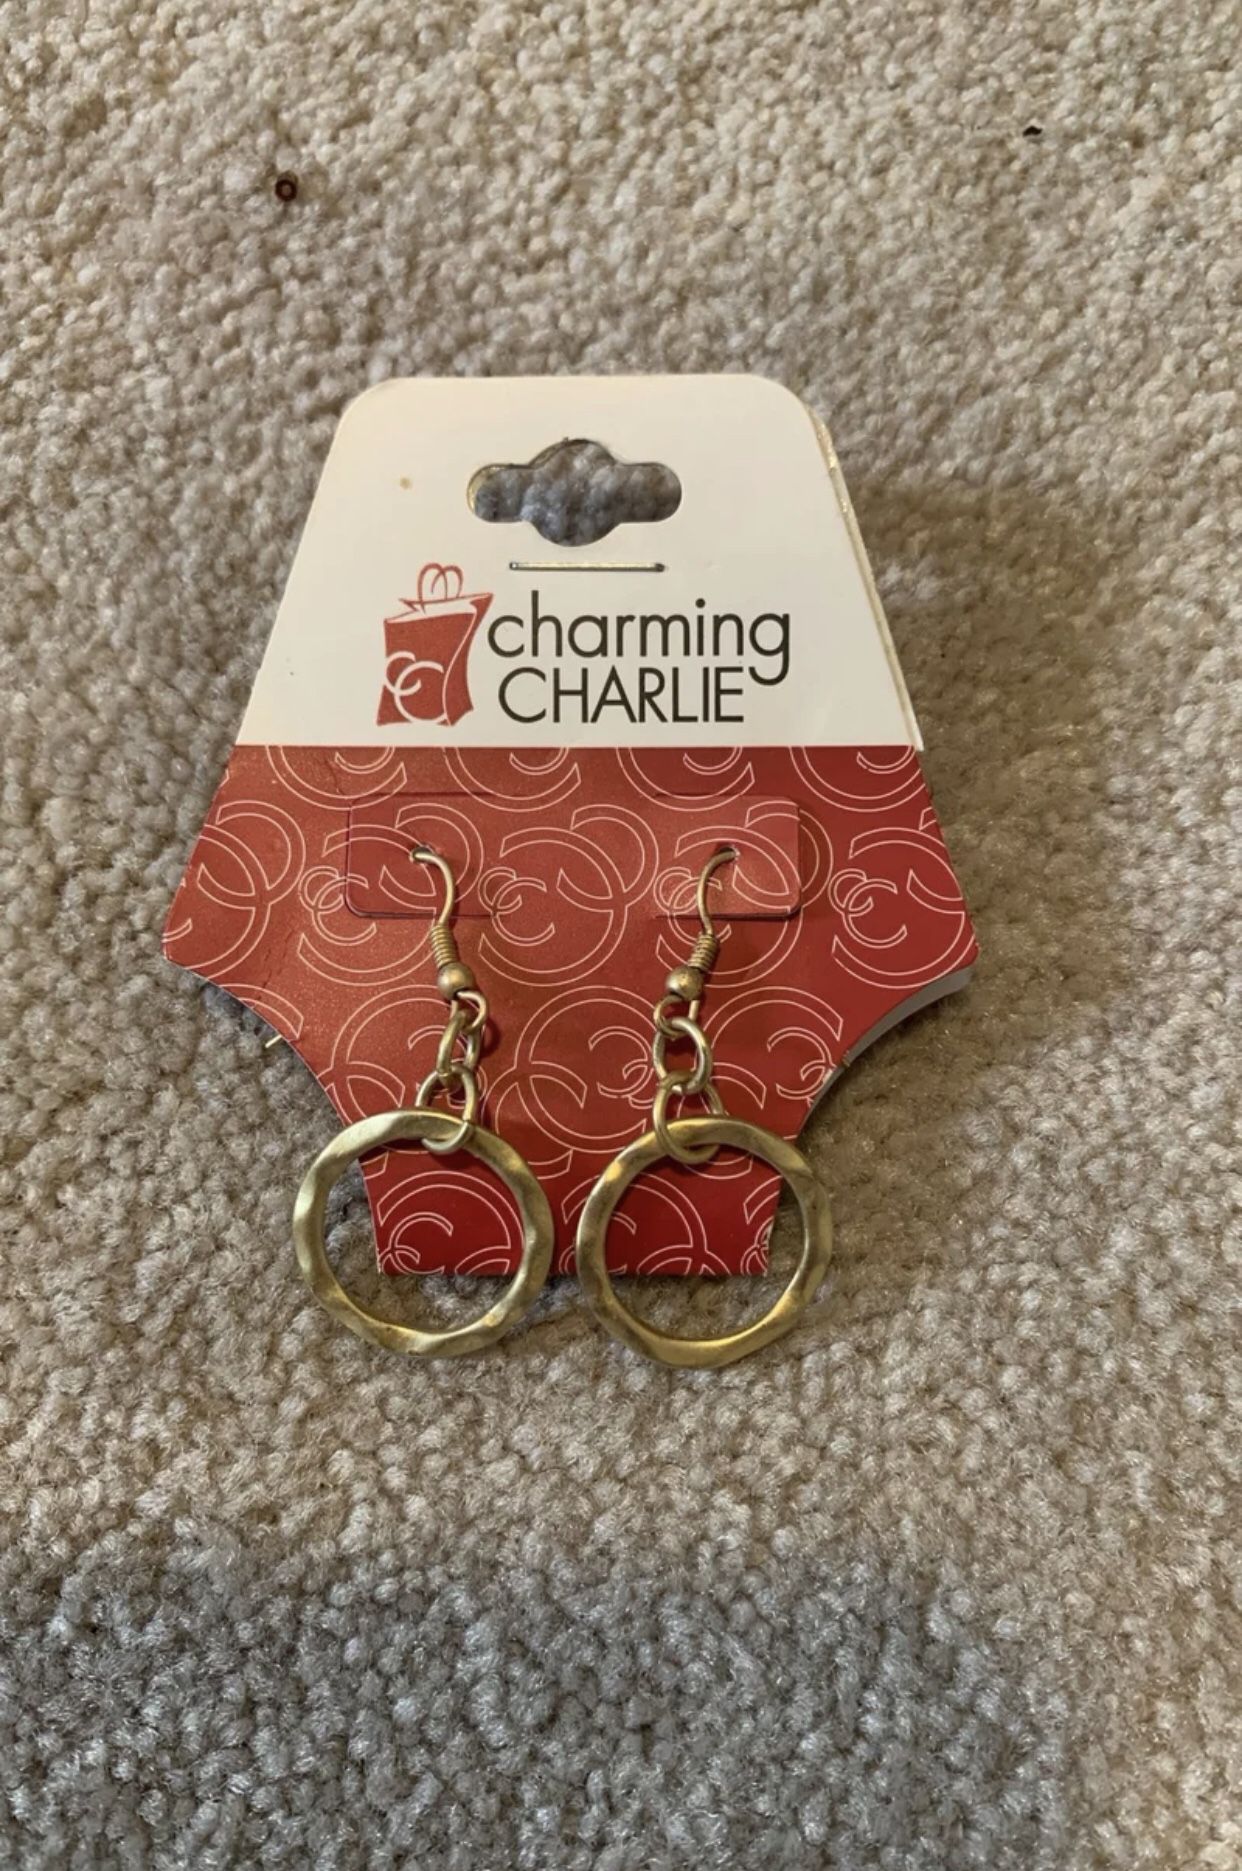 Charming Charlie earrings